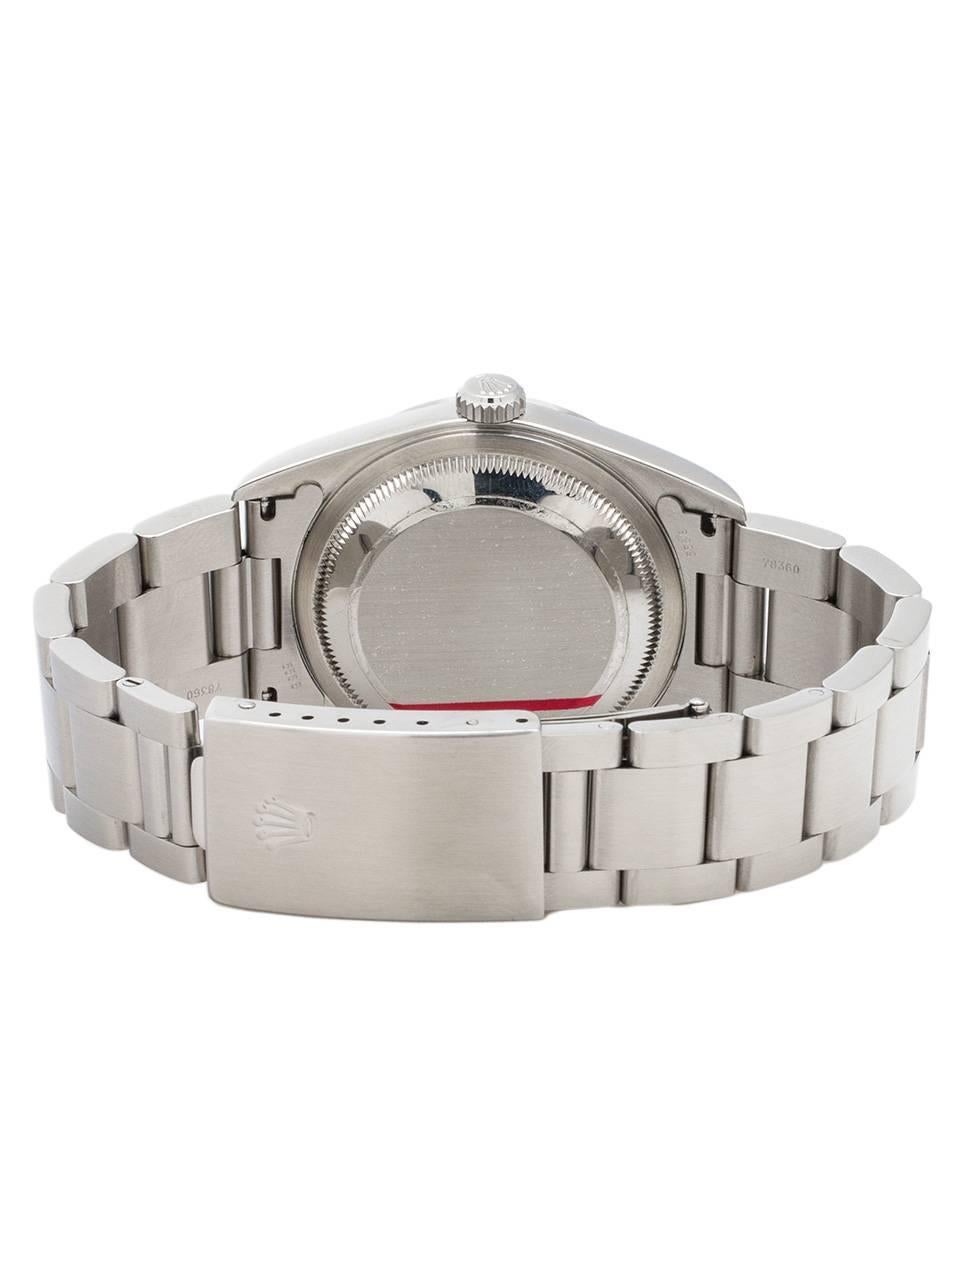 Men's Rolex Stainless Steel Datejust self winding Wristwatch Ref 16200, circa 2002